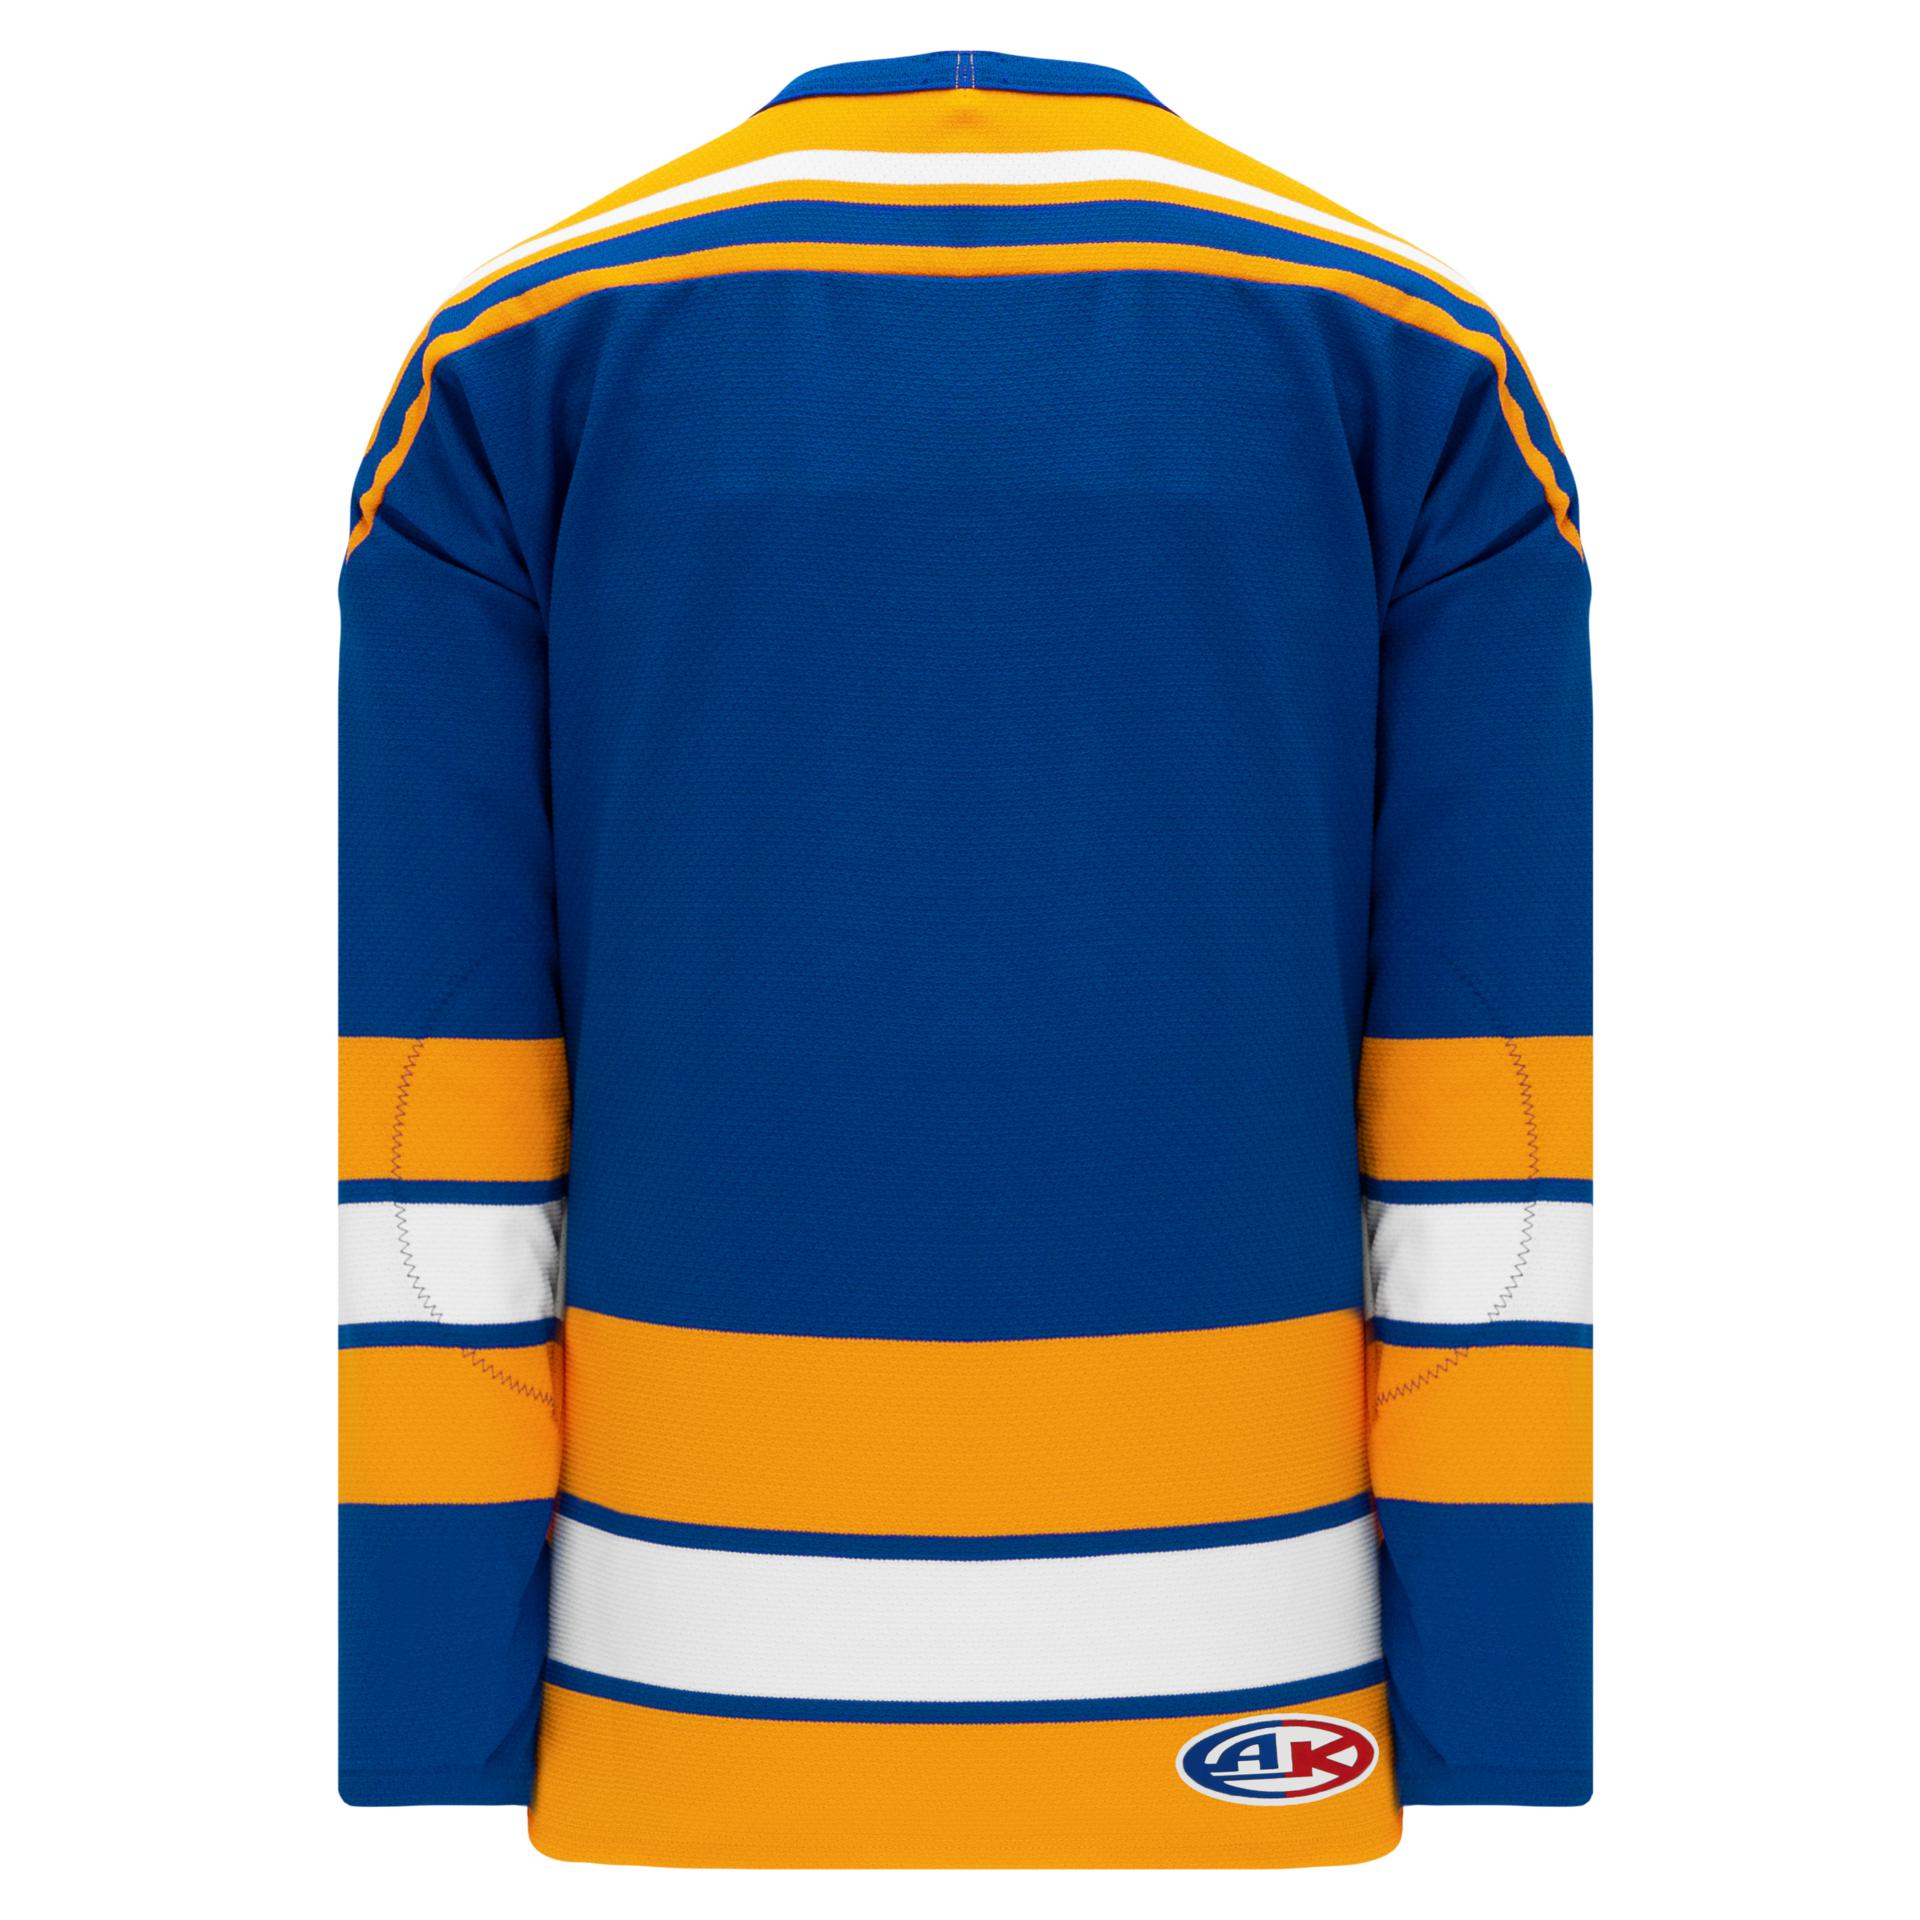 blue and yellow hockey jersey